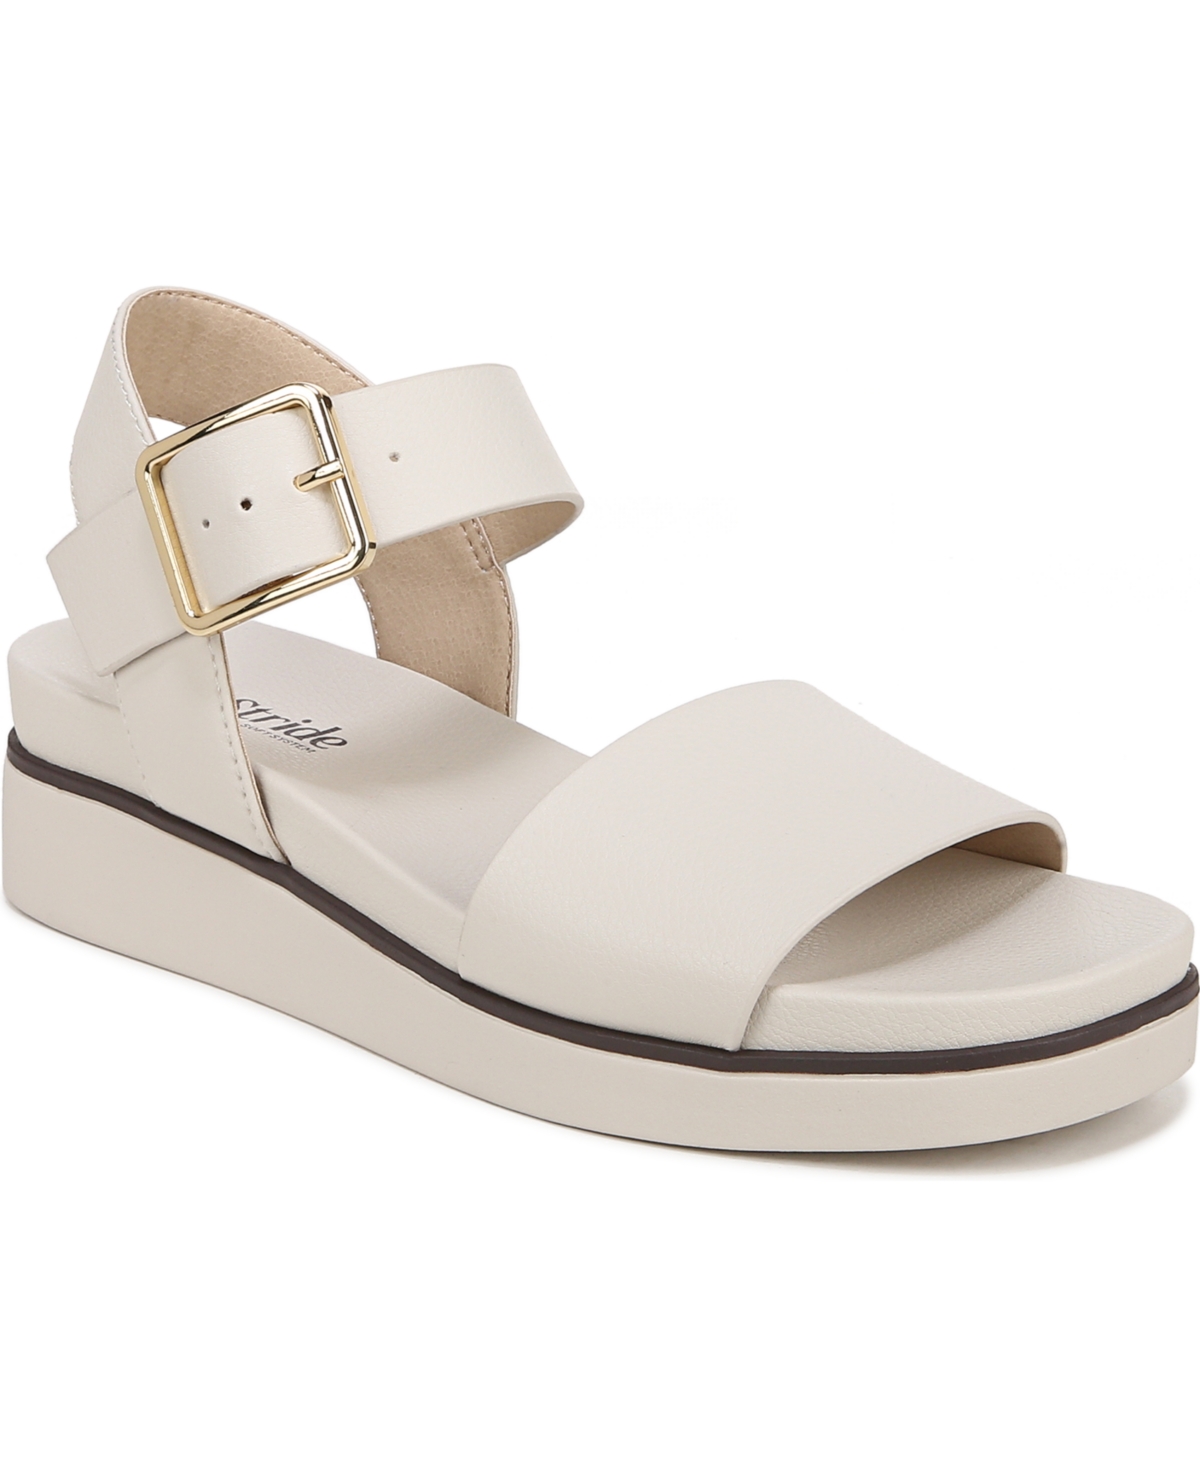 Women's Gillian Platform Flat Sandals - Bone White Faux Leather